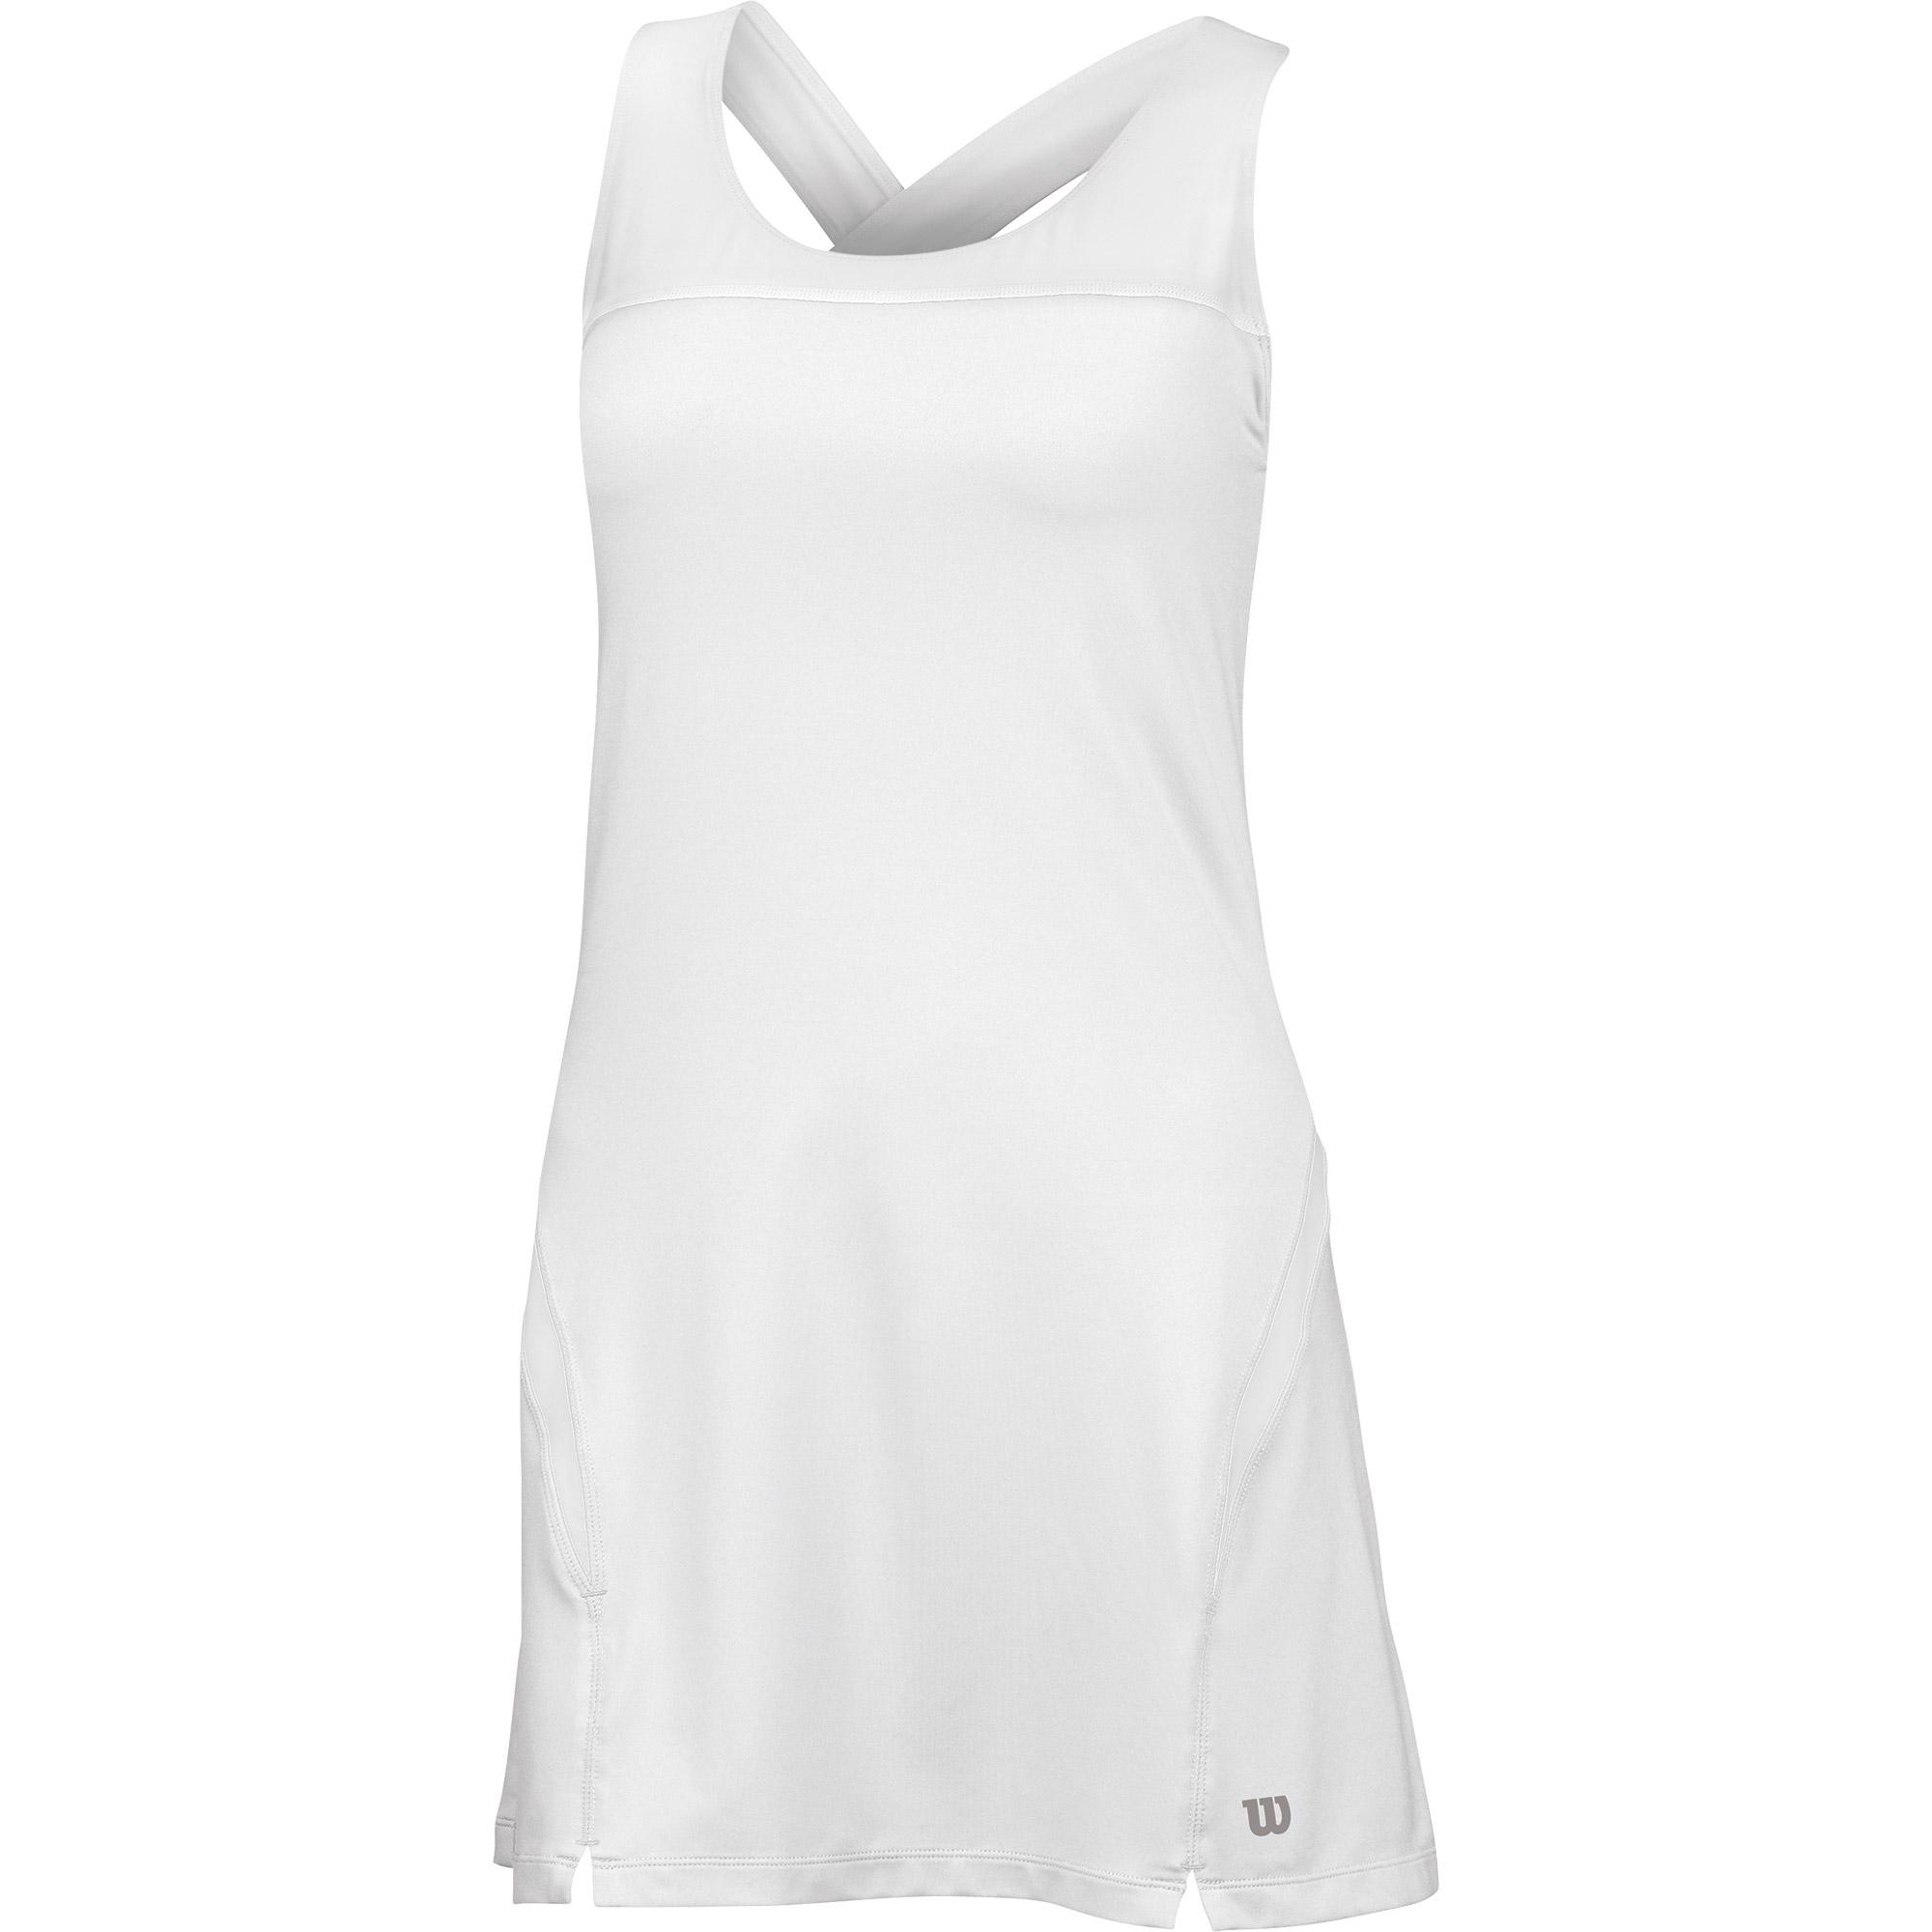 Wilson Girls Team Dress - White - Tennisnuts.com